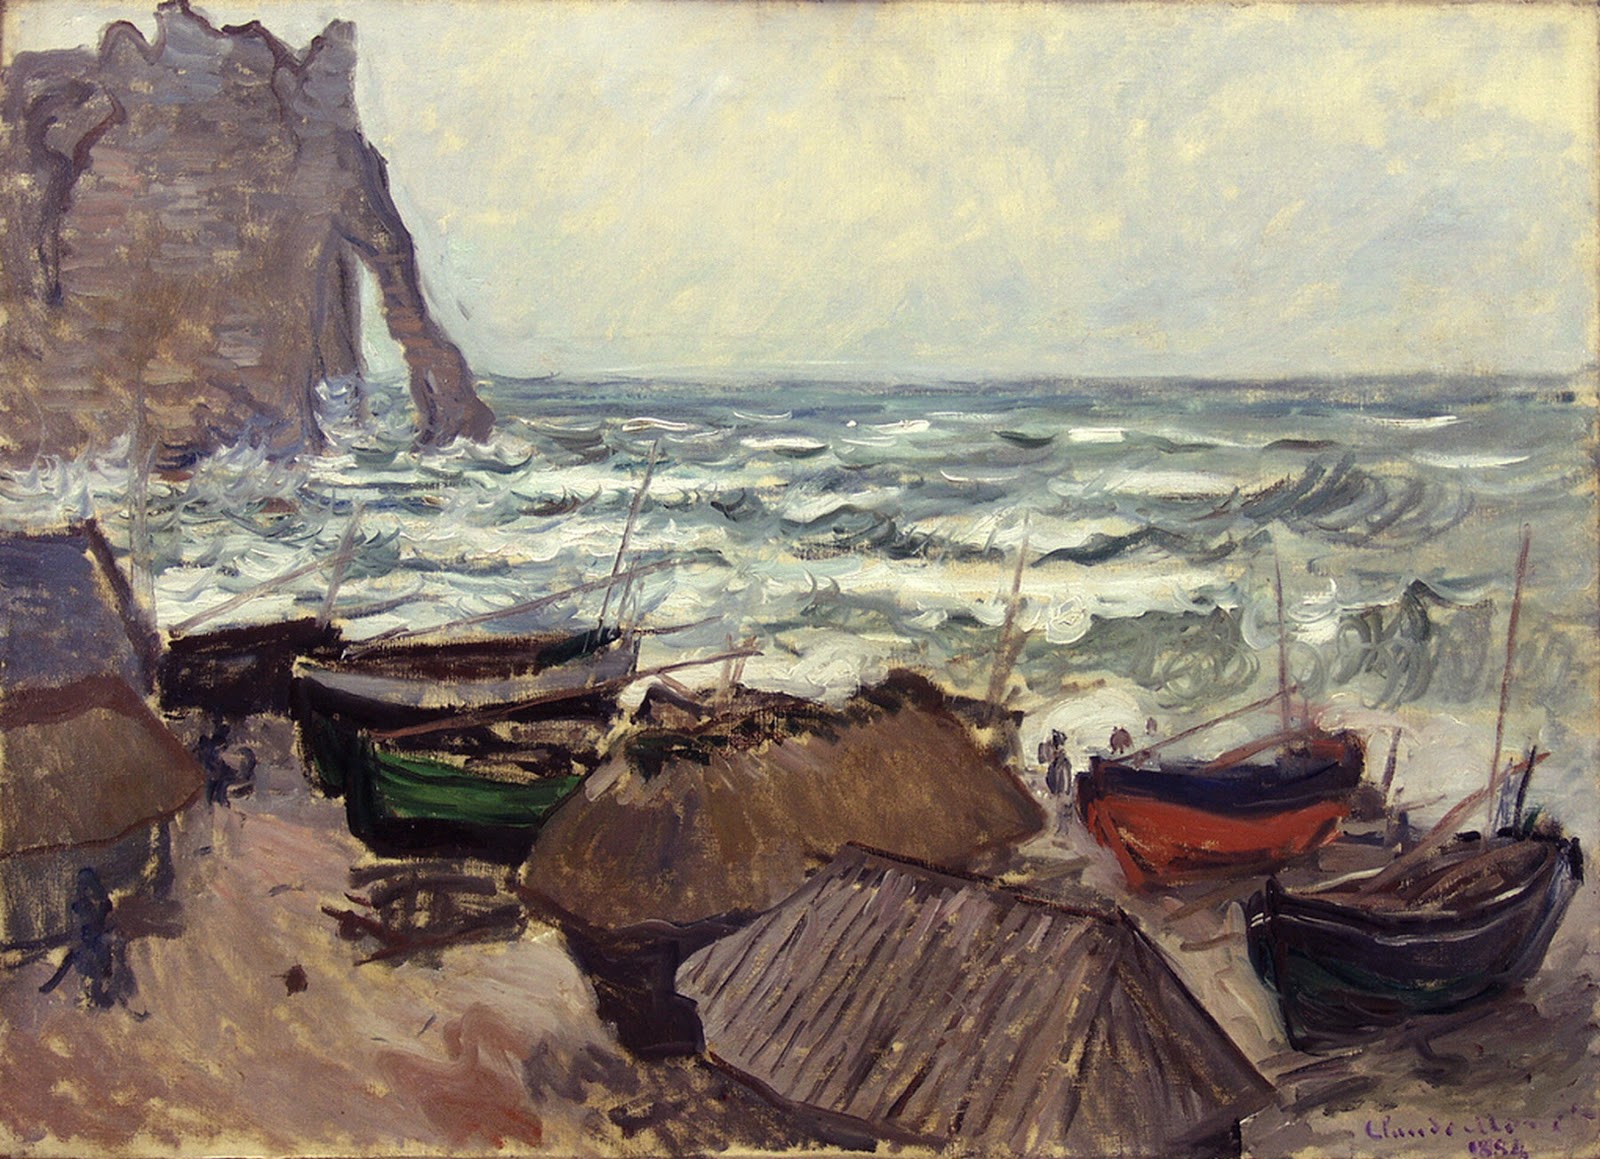 Claude+Monet-1840-1926 (217).jpg